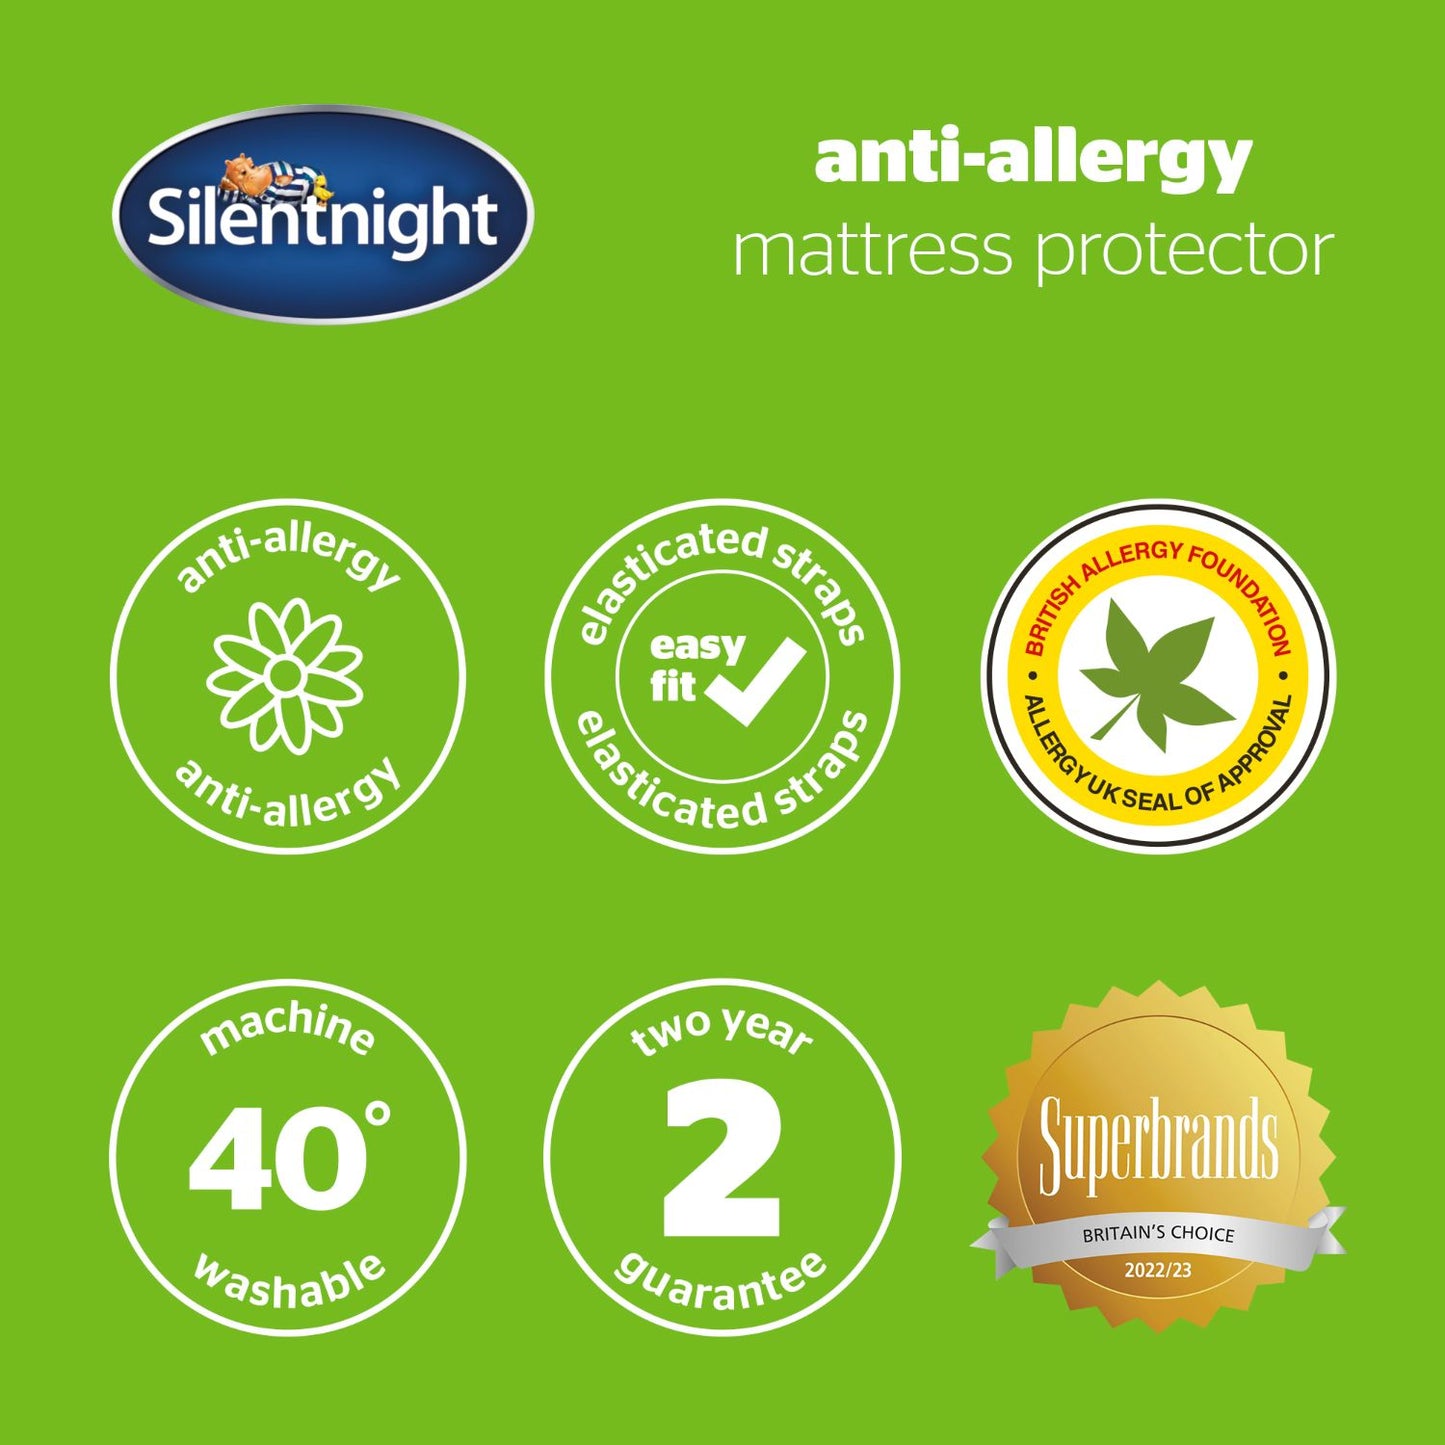 Silentnight Anti Allergy Mattress Topper